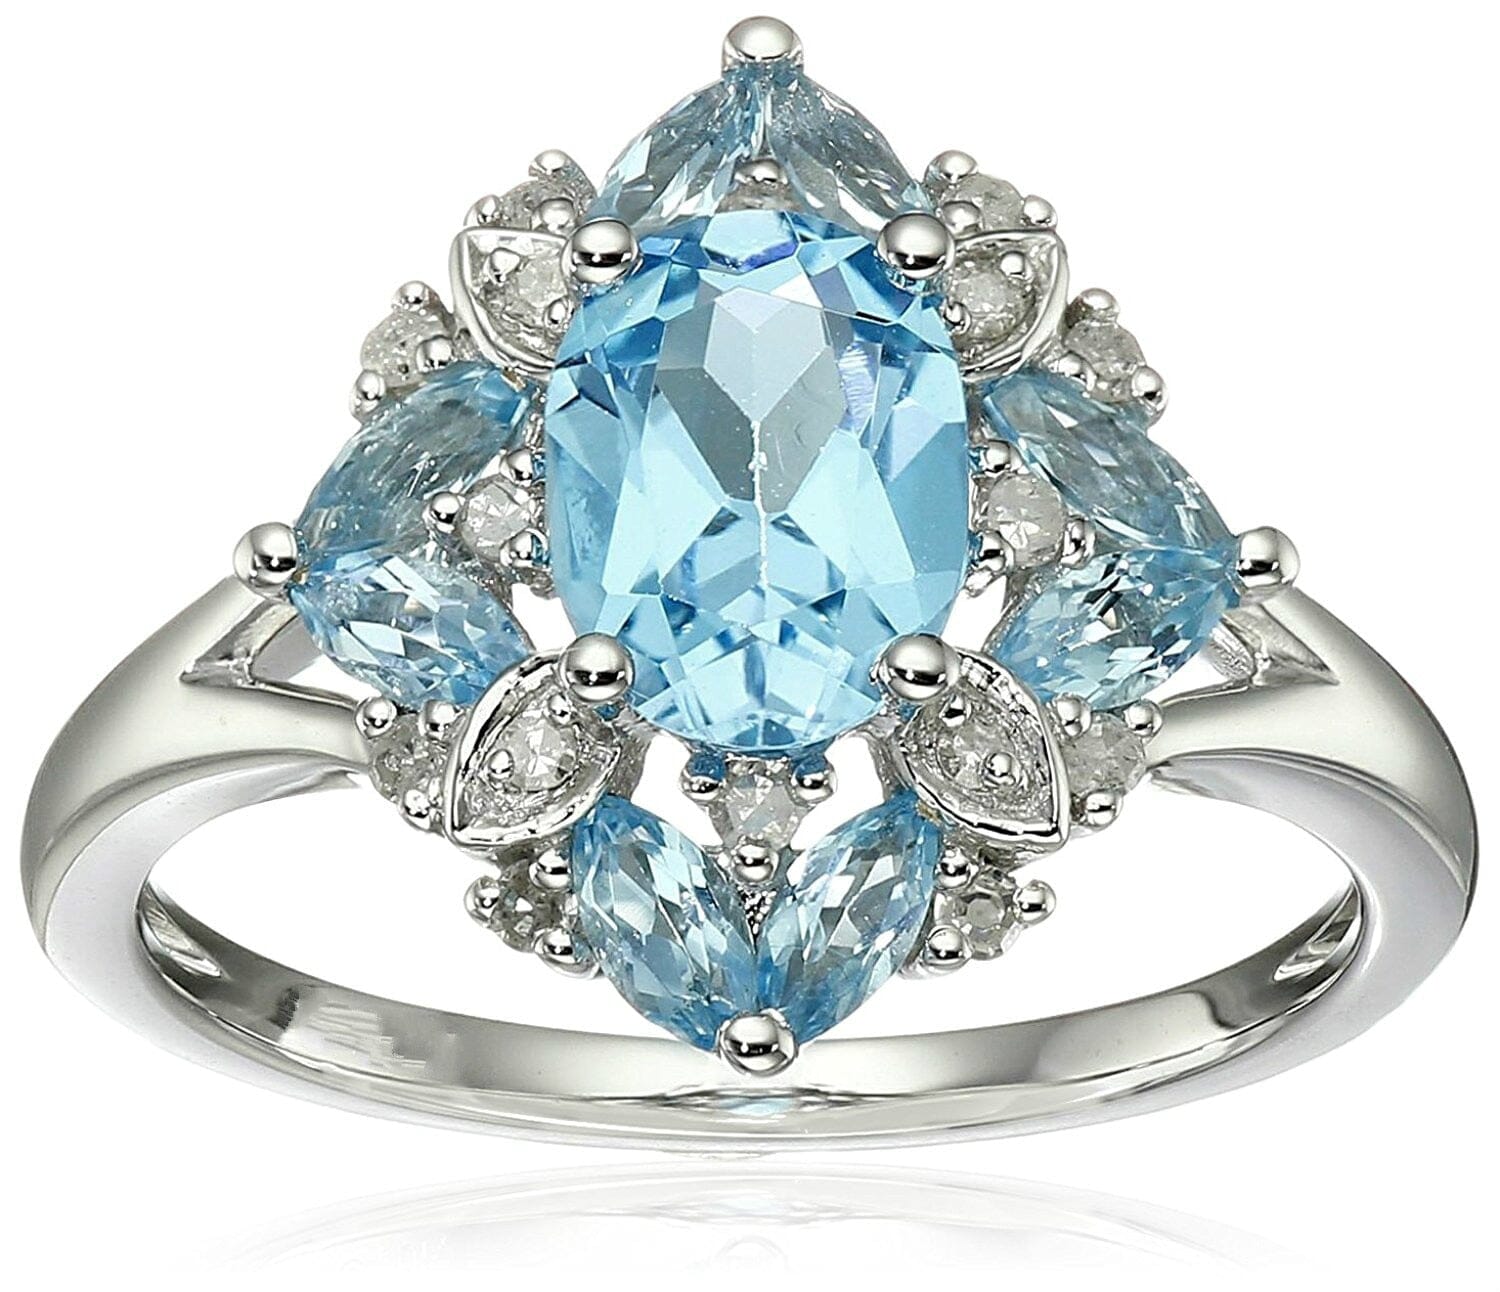 Gorgeous Light Blue Aquamarine Bridal Ring6light blue